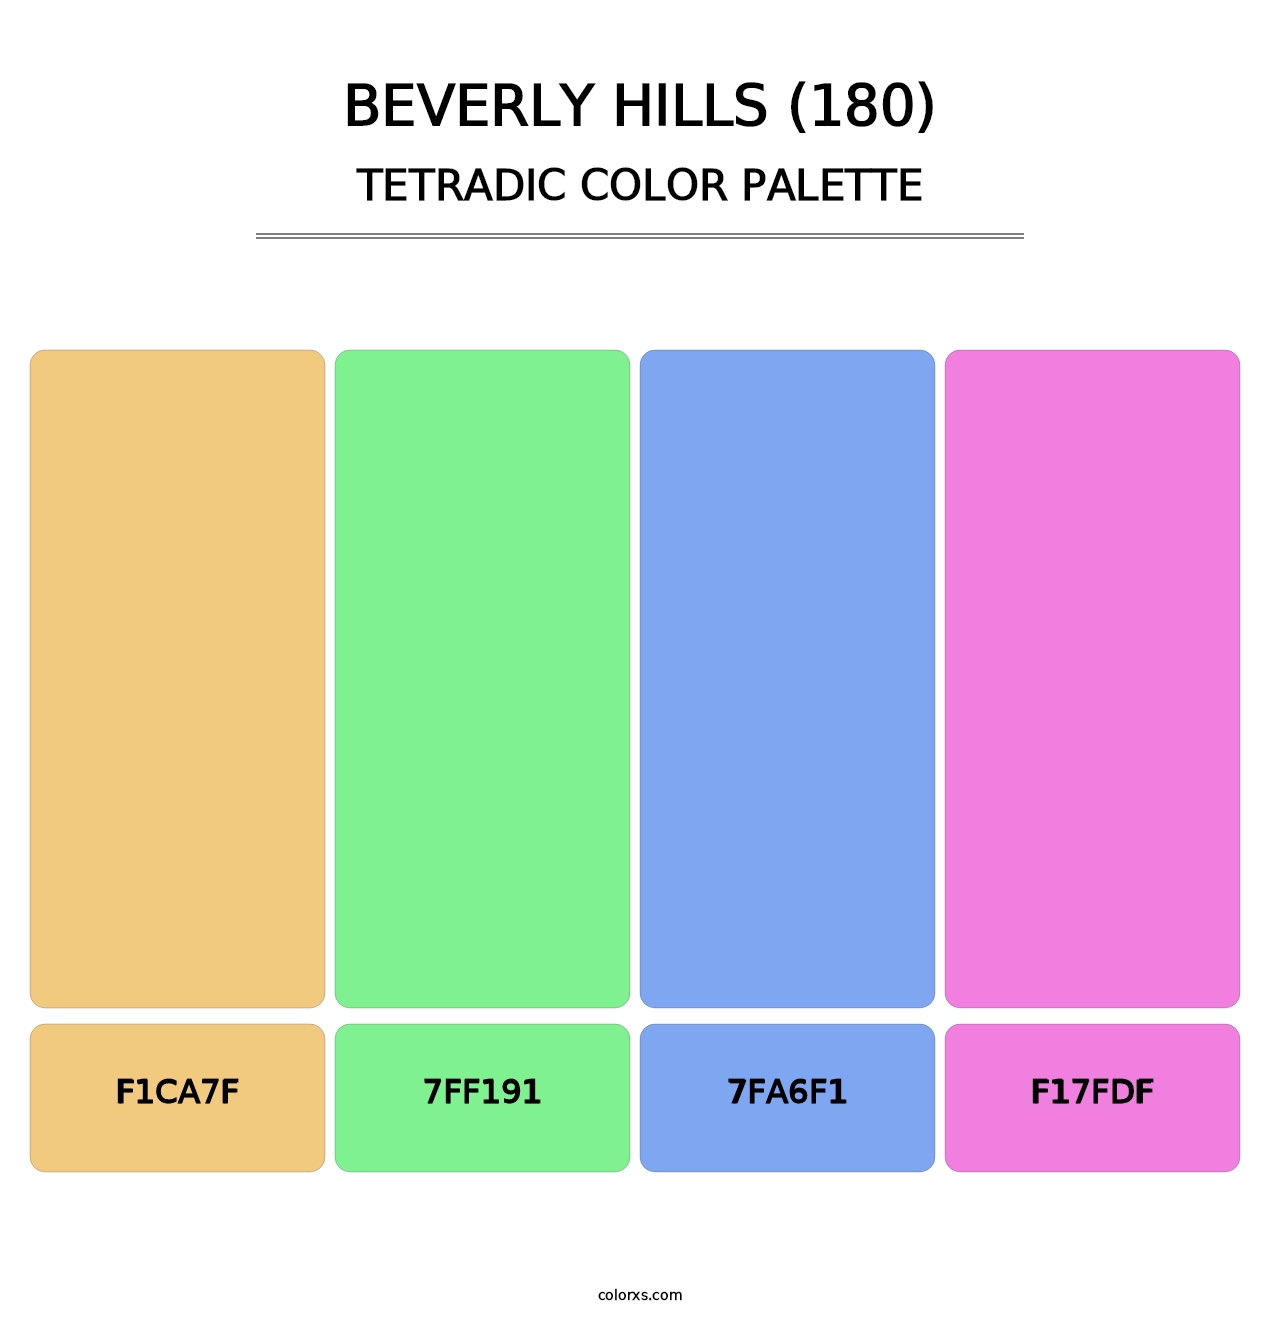 Beverly Hills (180) - Tetradic Color Palette